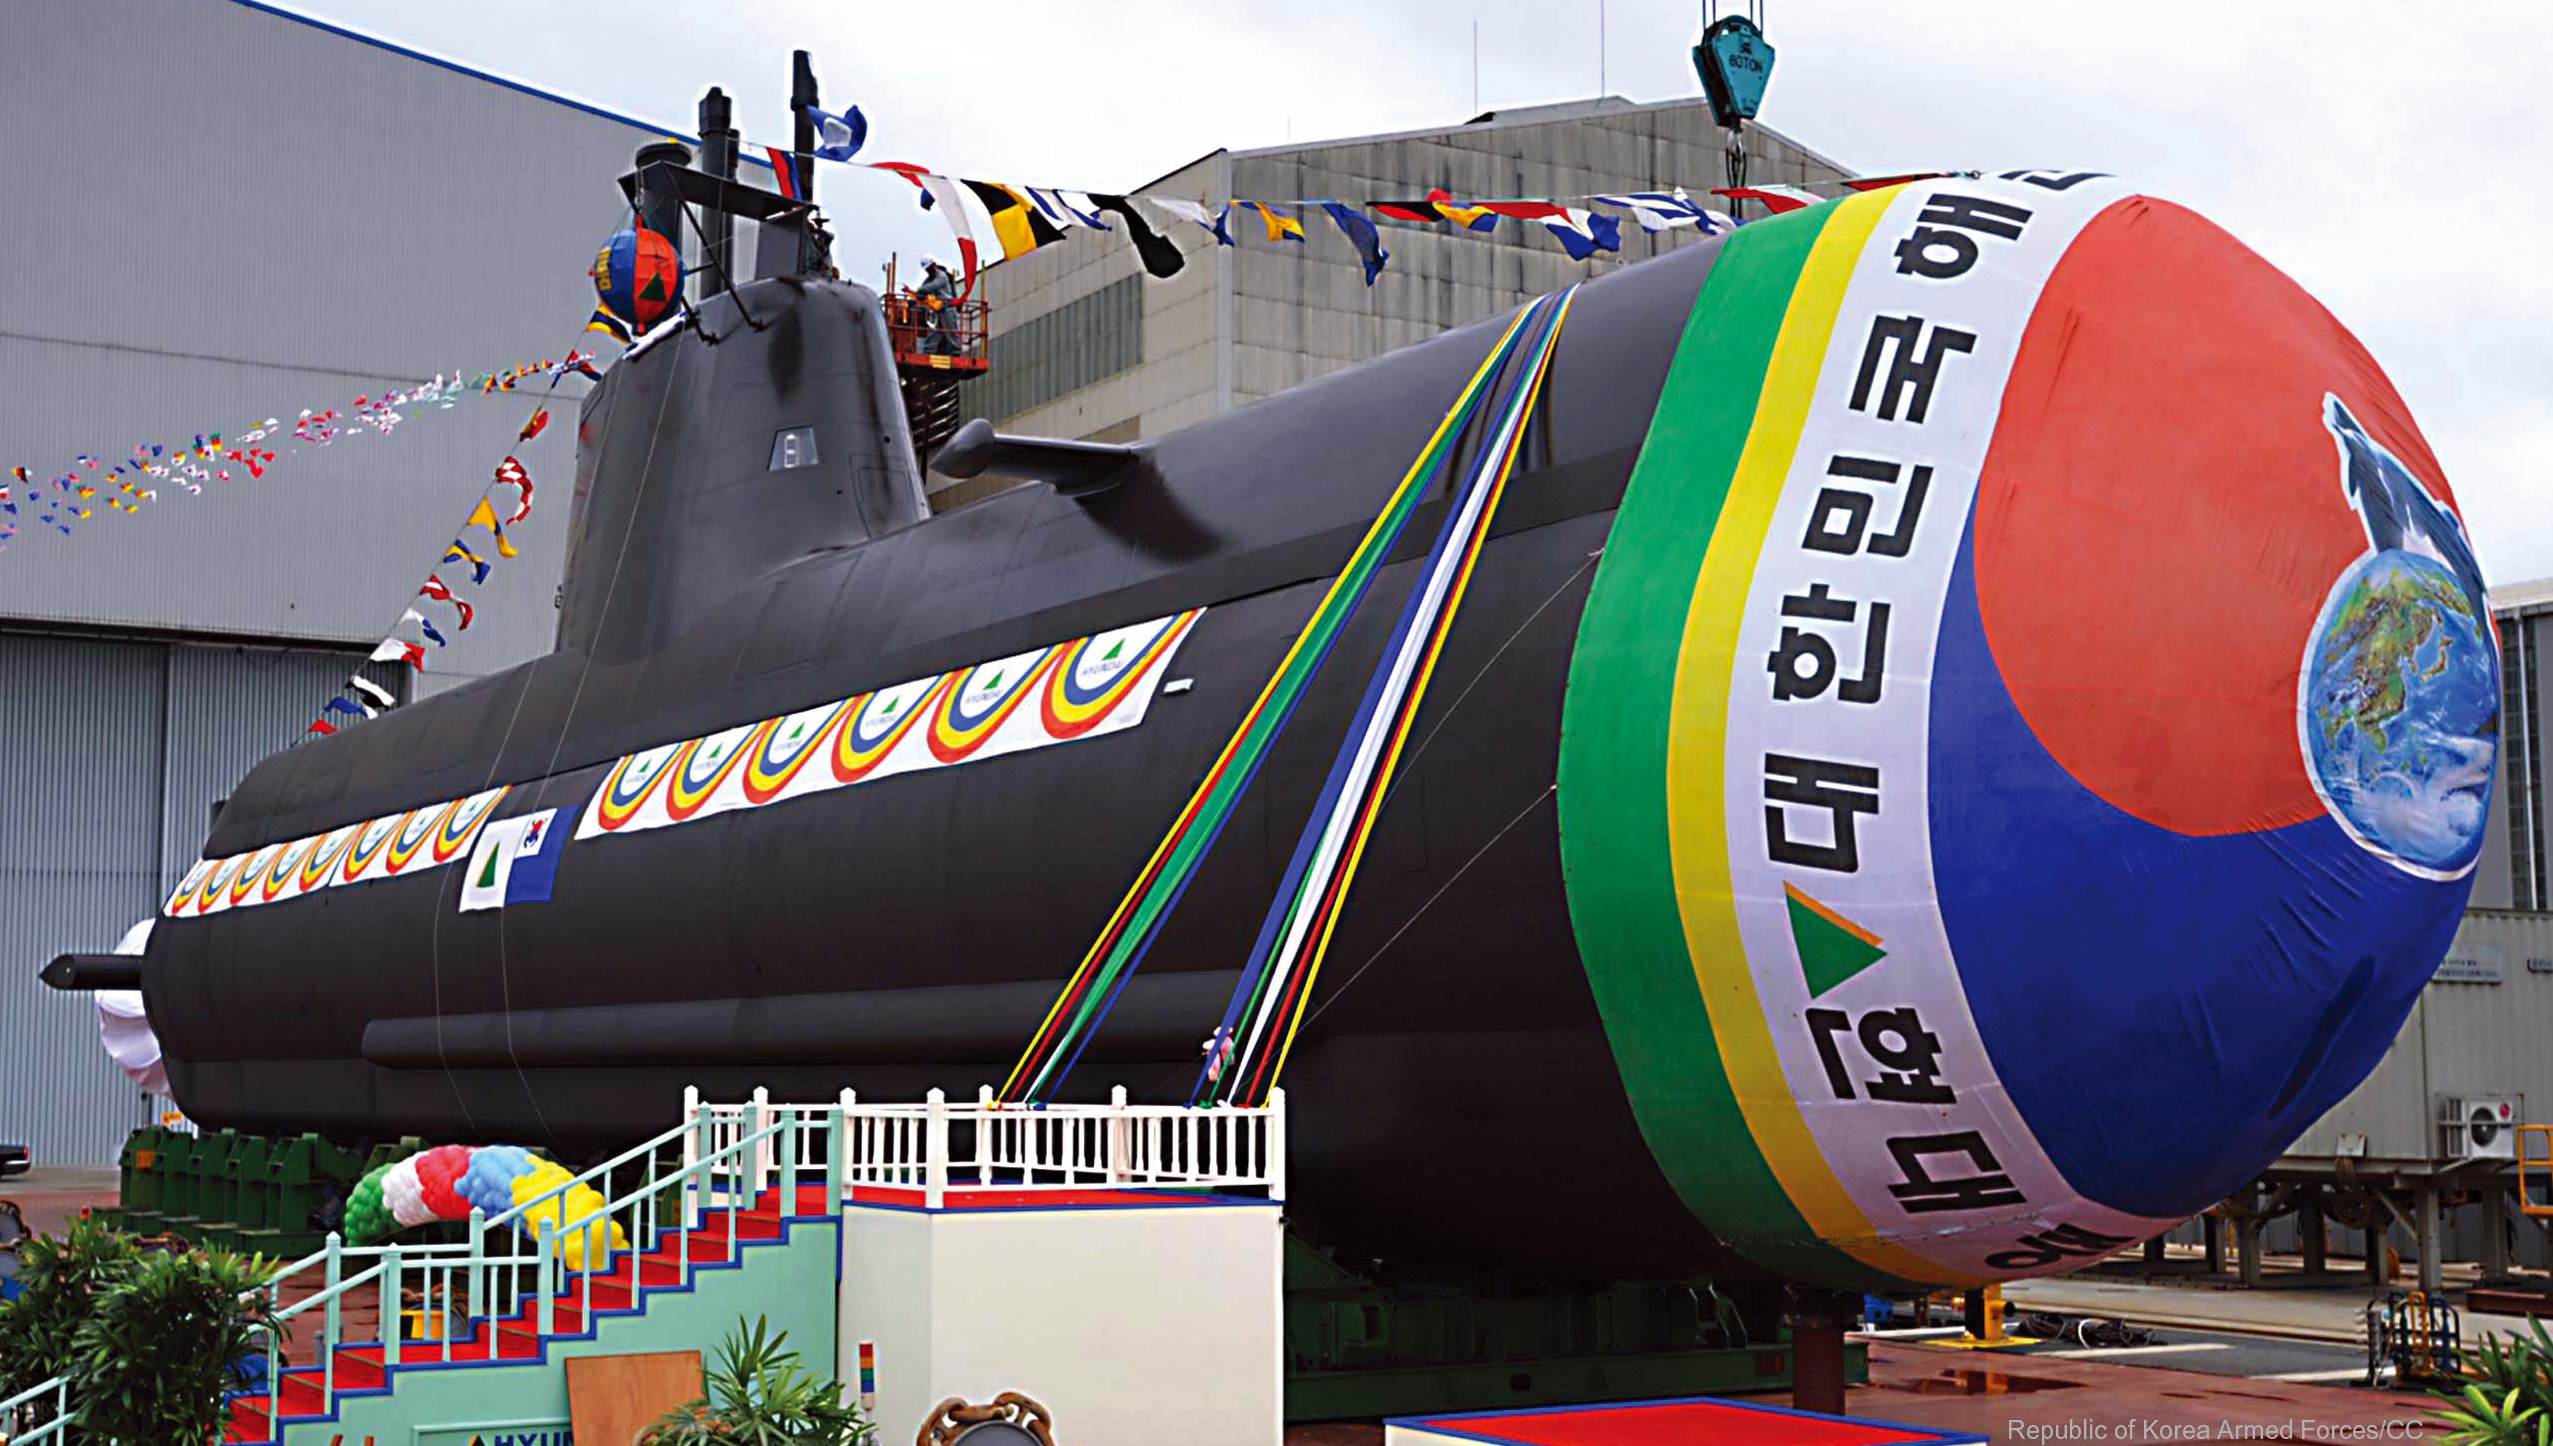 ss-075 roks an jung-geun son won-il class attack submarine type-214 kss-ii republic of korea navy rokn torpedo ssm missile 02